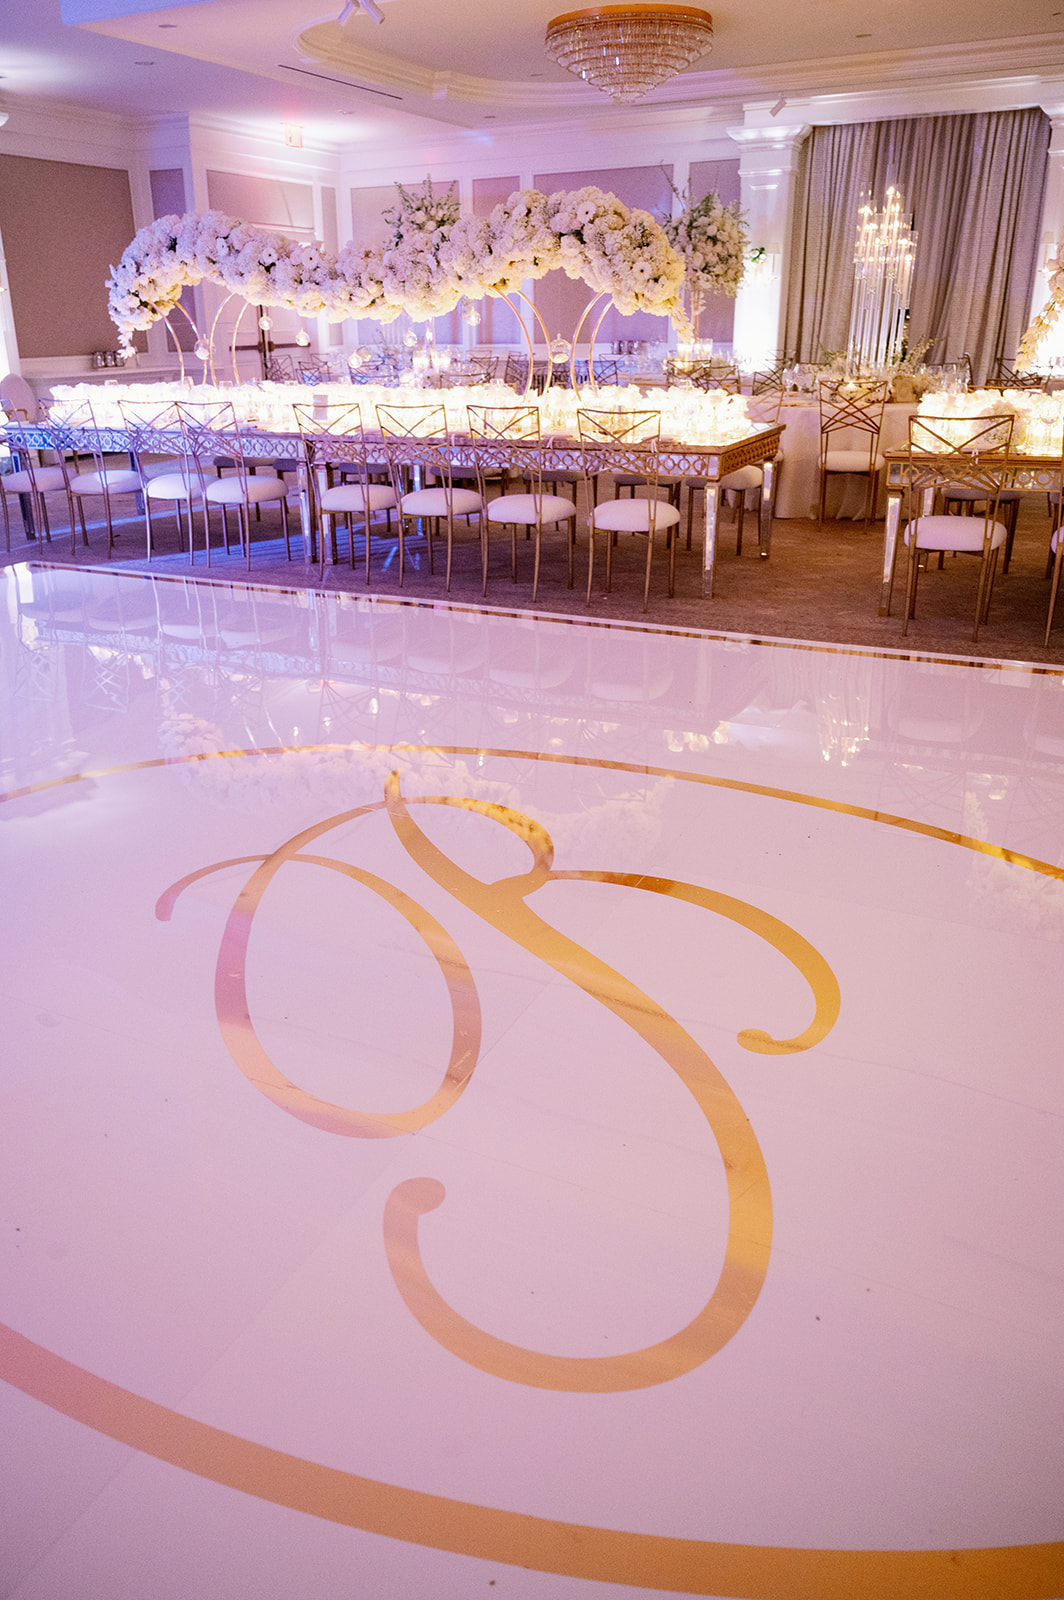 Pine Hollow Country Club wedding reception with custom gold monogram dance floor. 